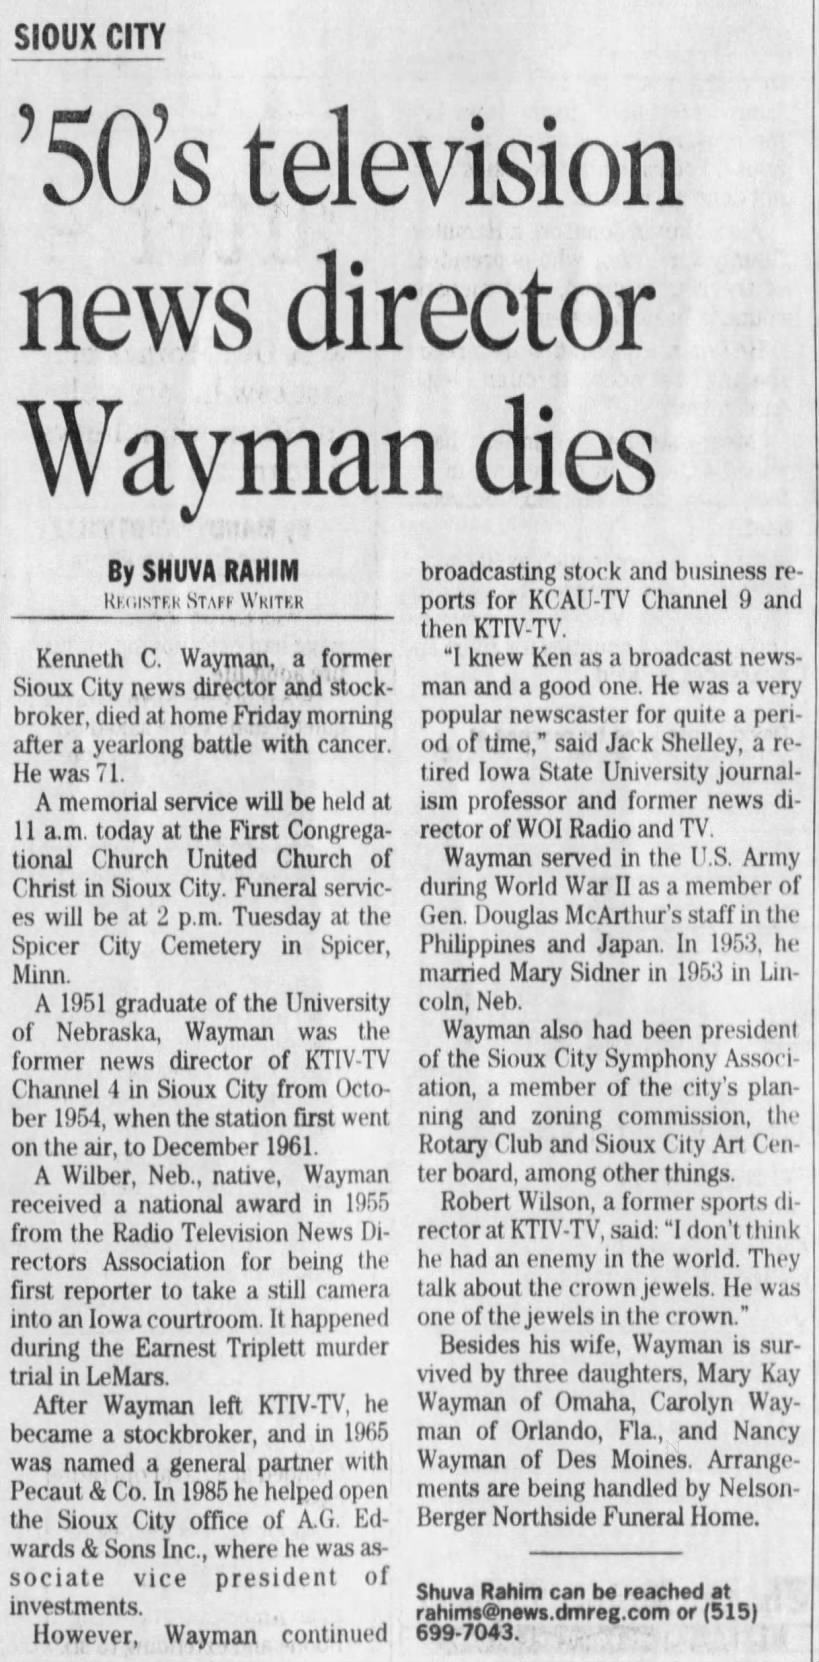 '50's television news director Wayman dies